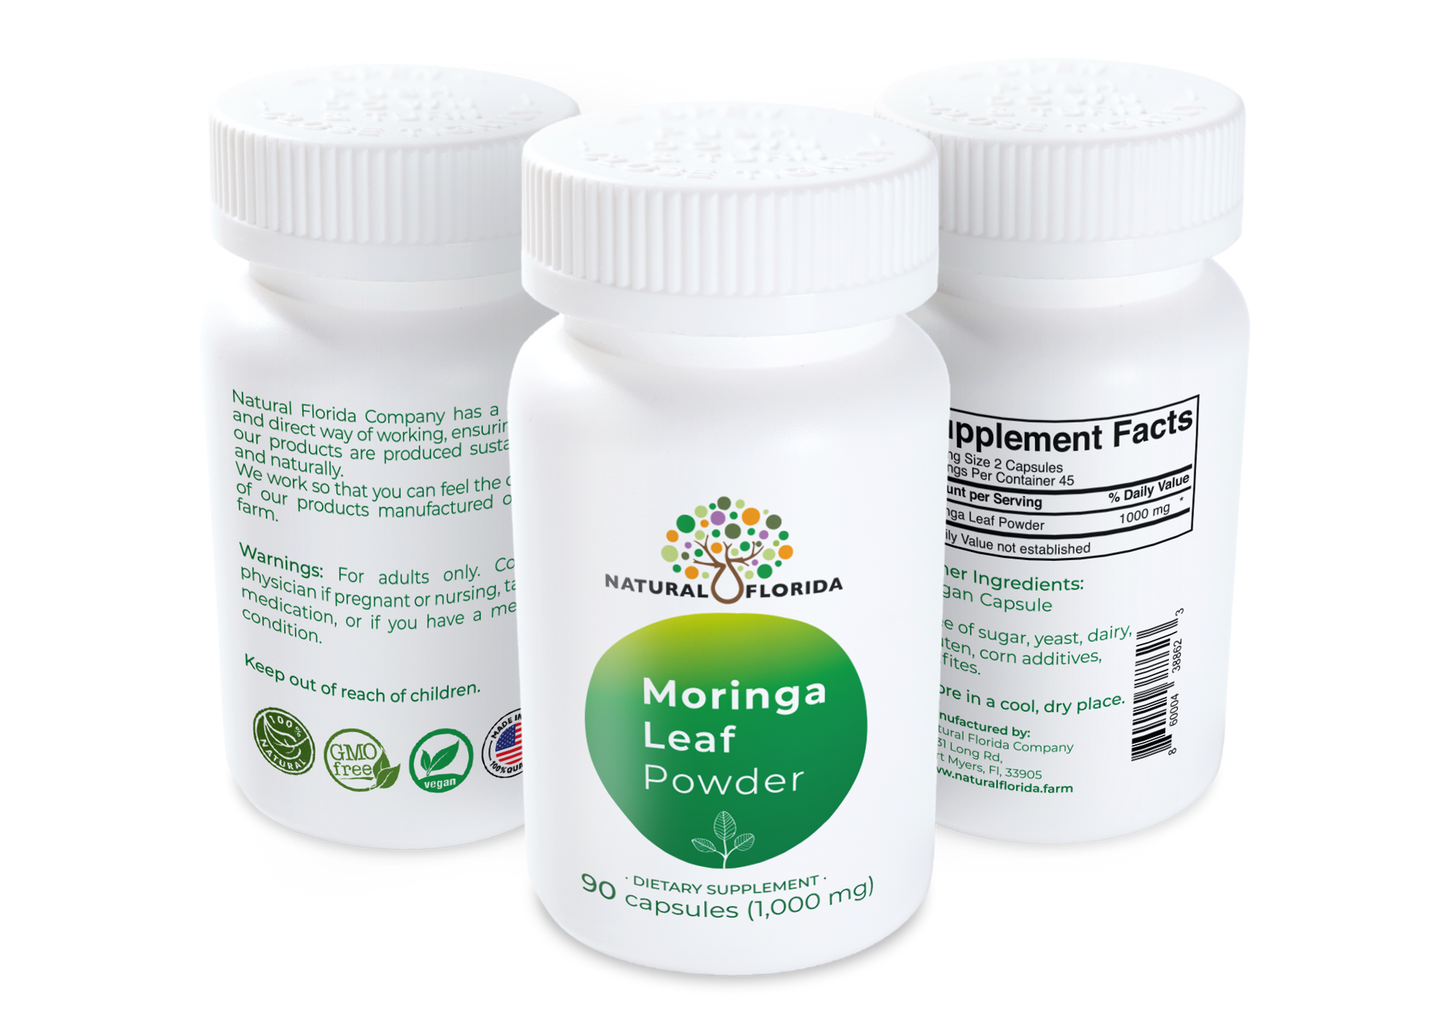 Moringa Leaf Powder Premium Quality- 90 Vegan Capsules - Natural Florida - Made in USA